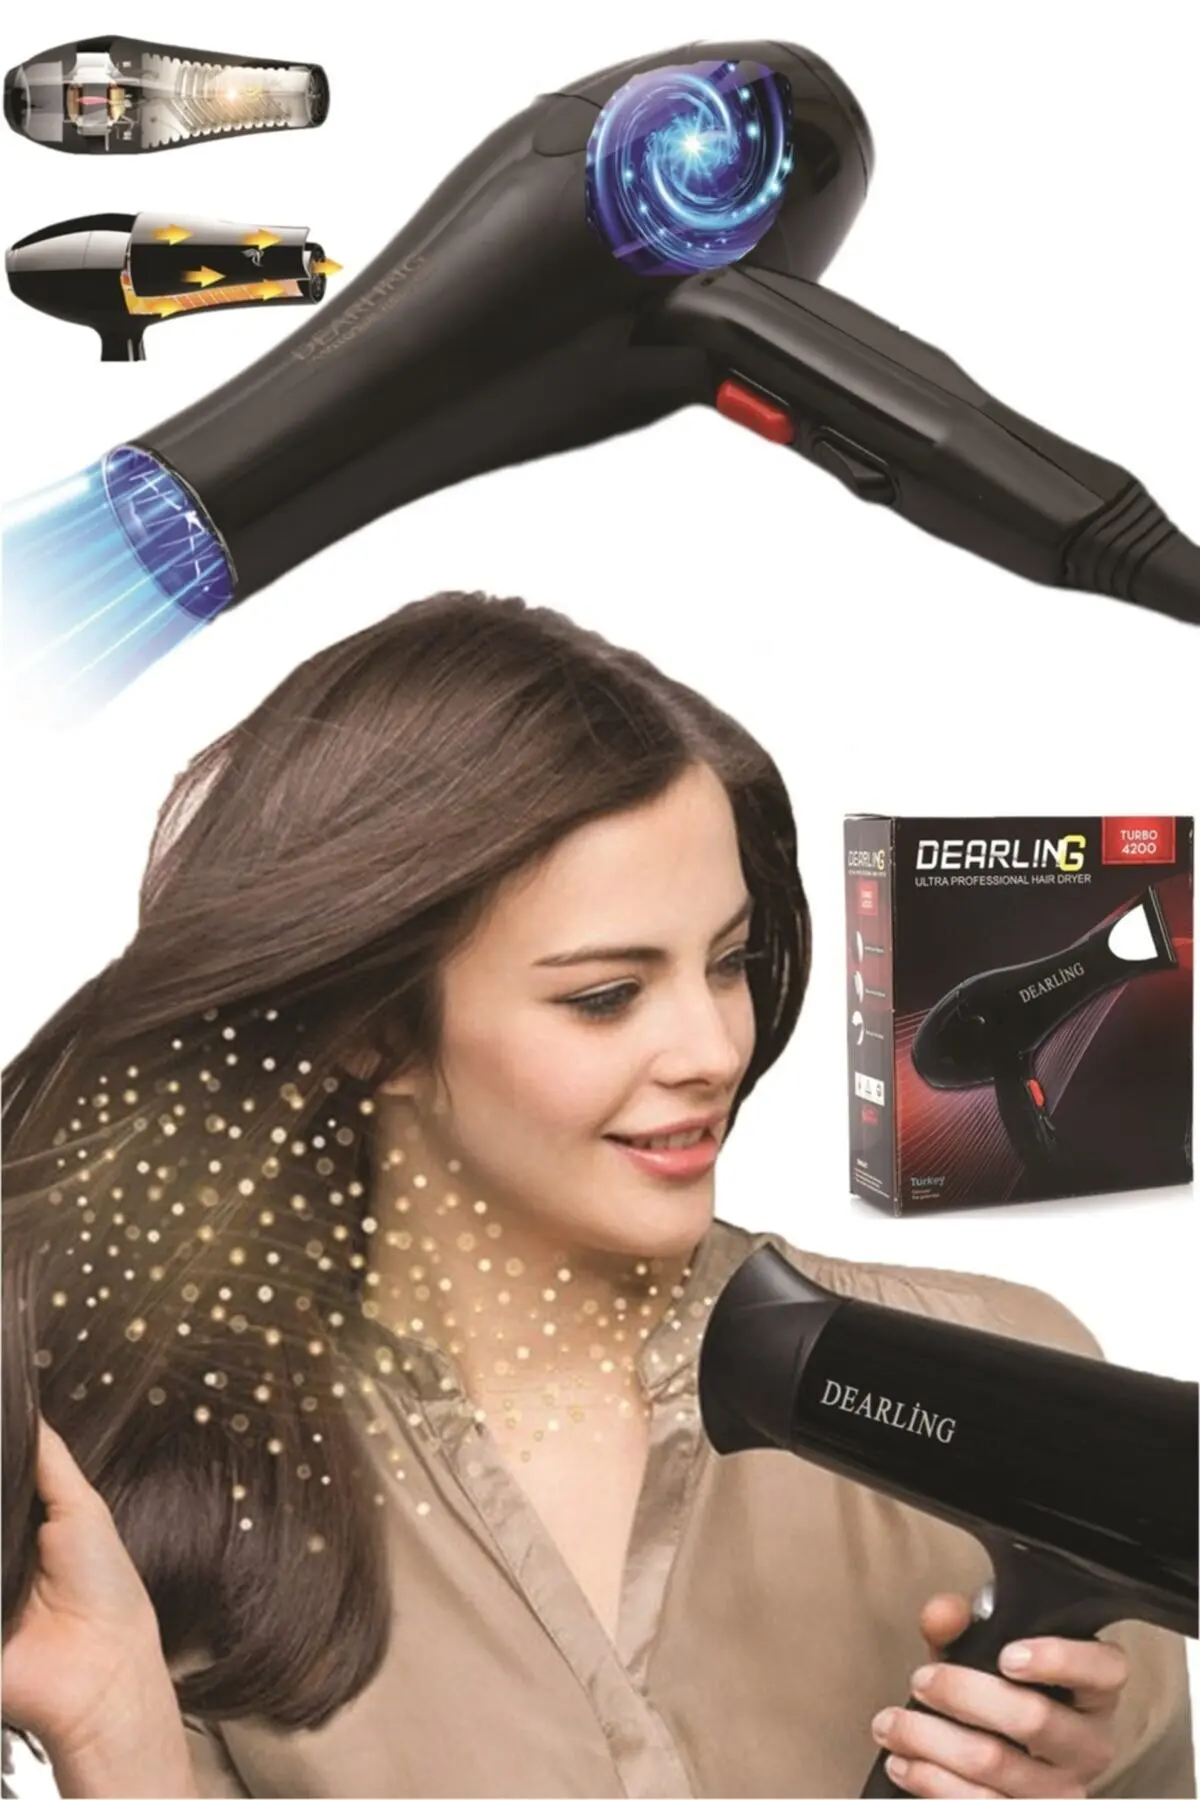 Dearling Professional 4200 Hair Dryer Blow Dryer Hair Straightener